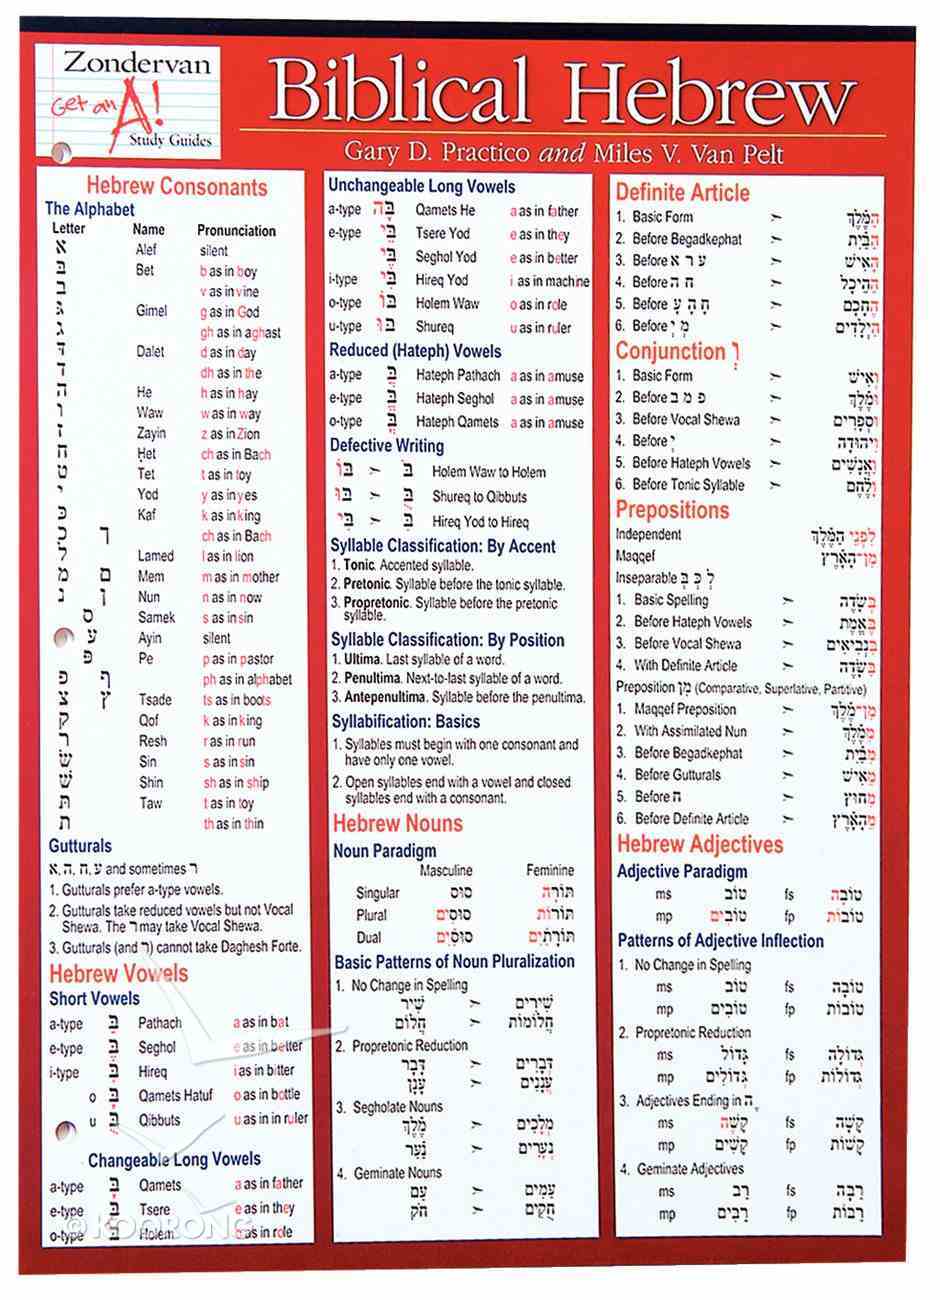 Zondervan Biblical Hebrew Study Guide Chart/card